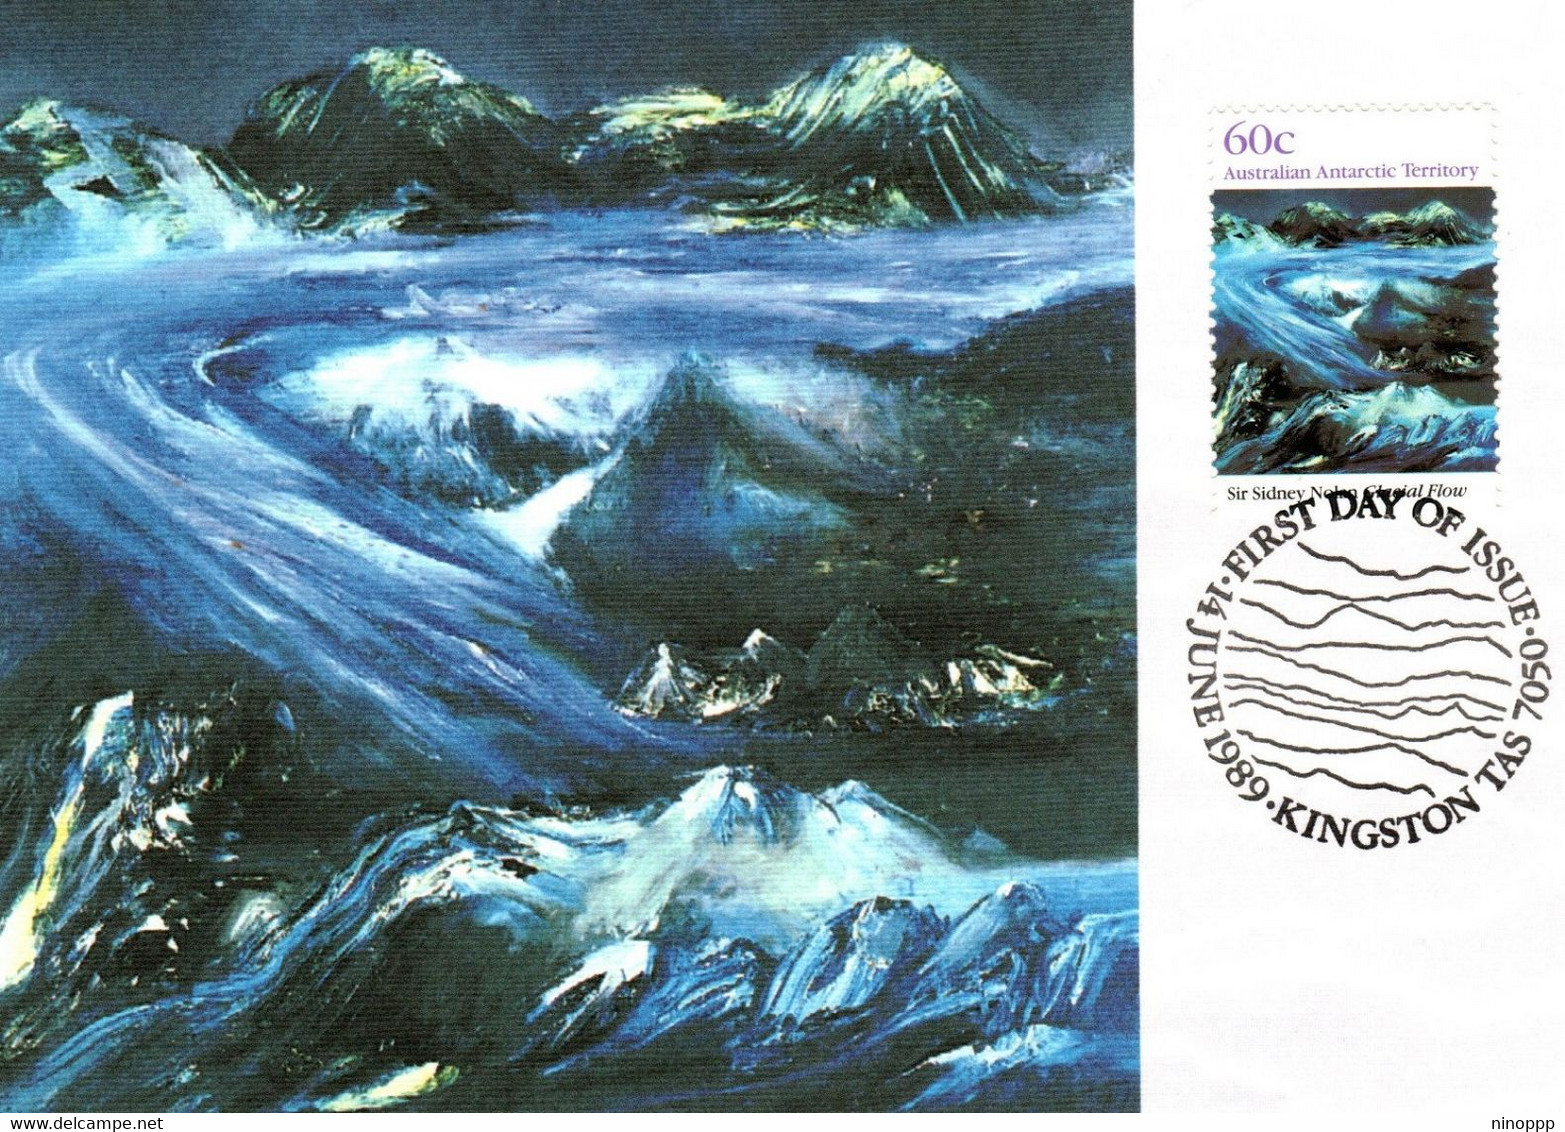 Australian Antarctic Territory 1989 Landscapes,Glacial Flow,maximum Card - Cartes-maximum